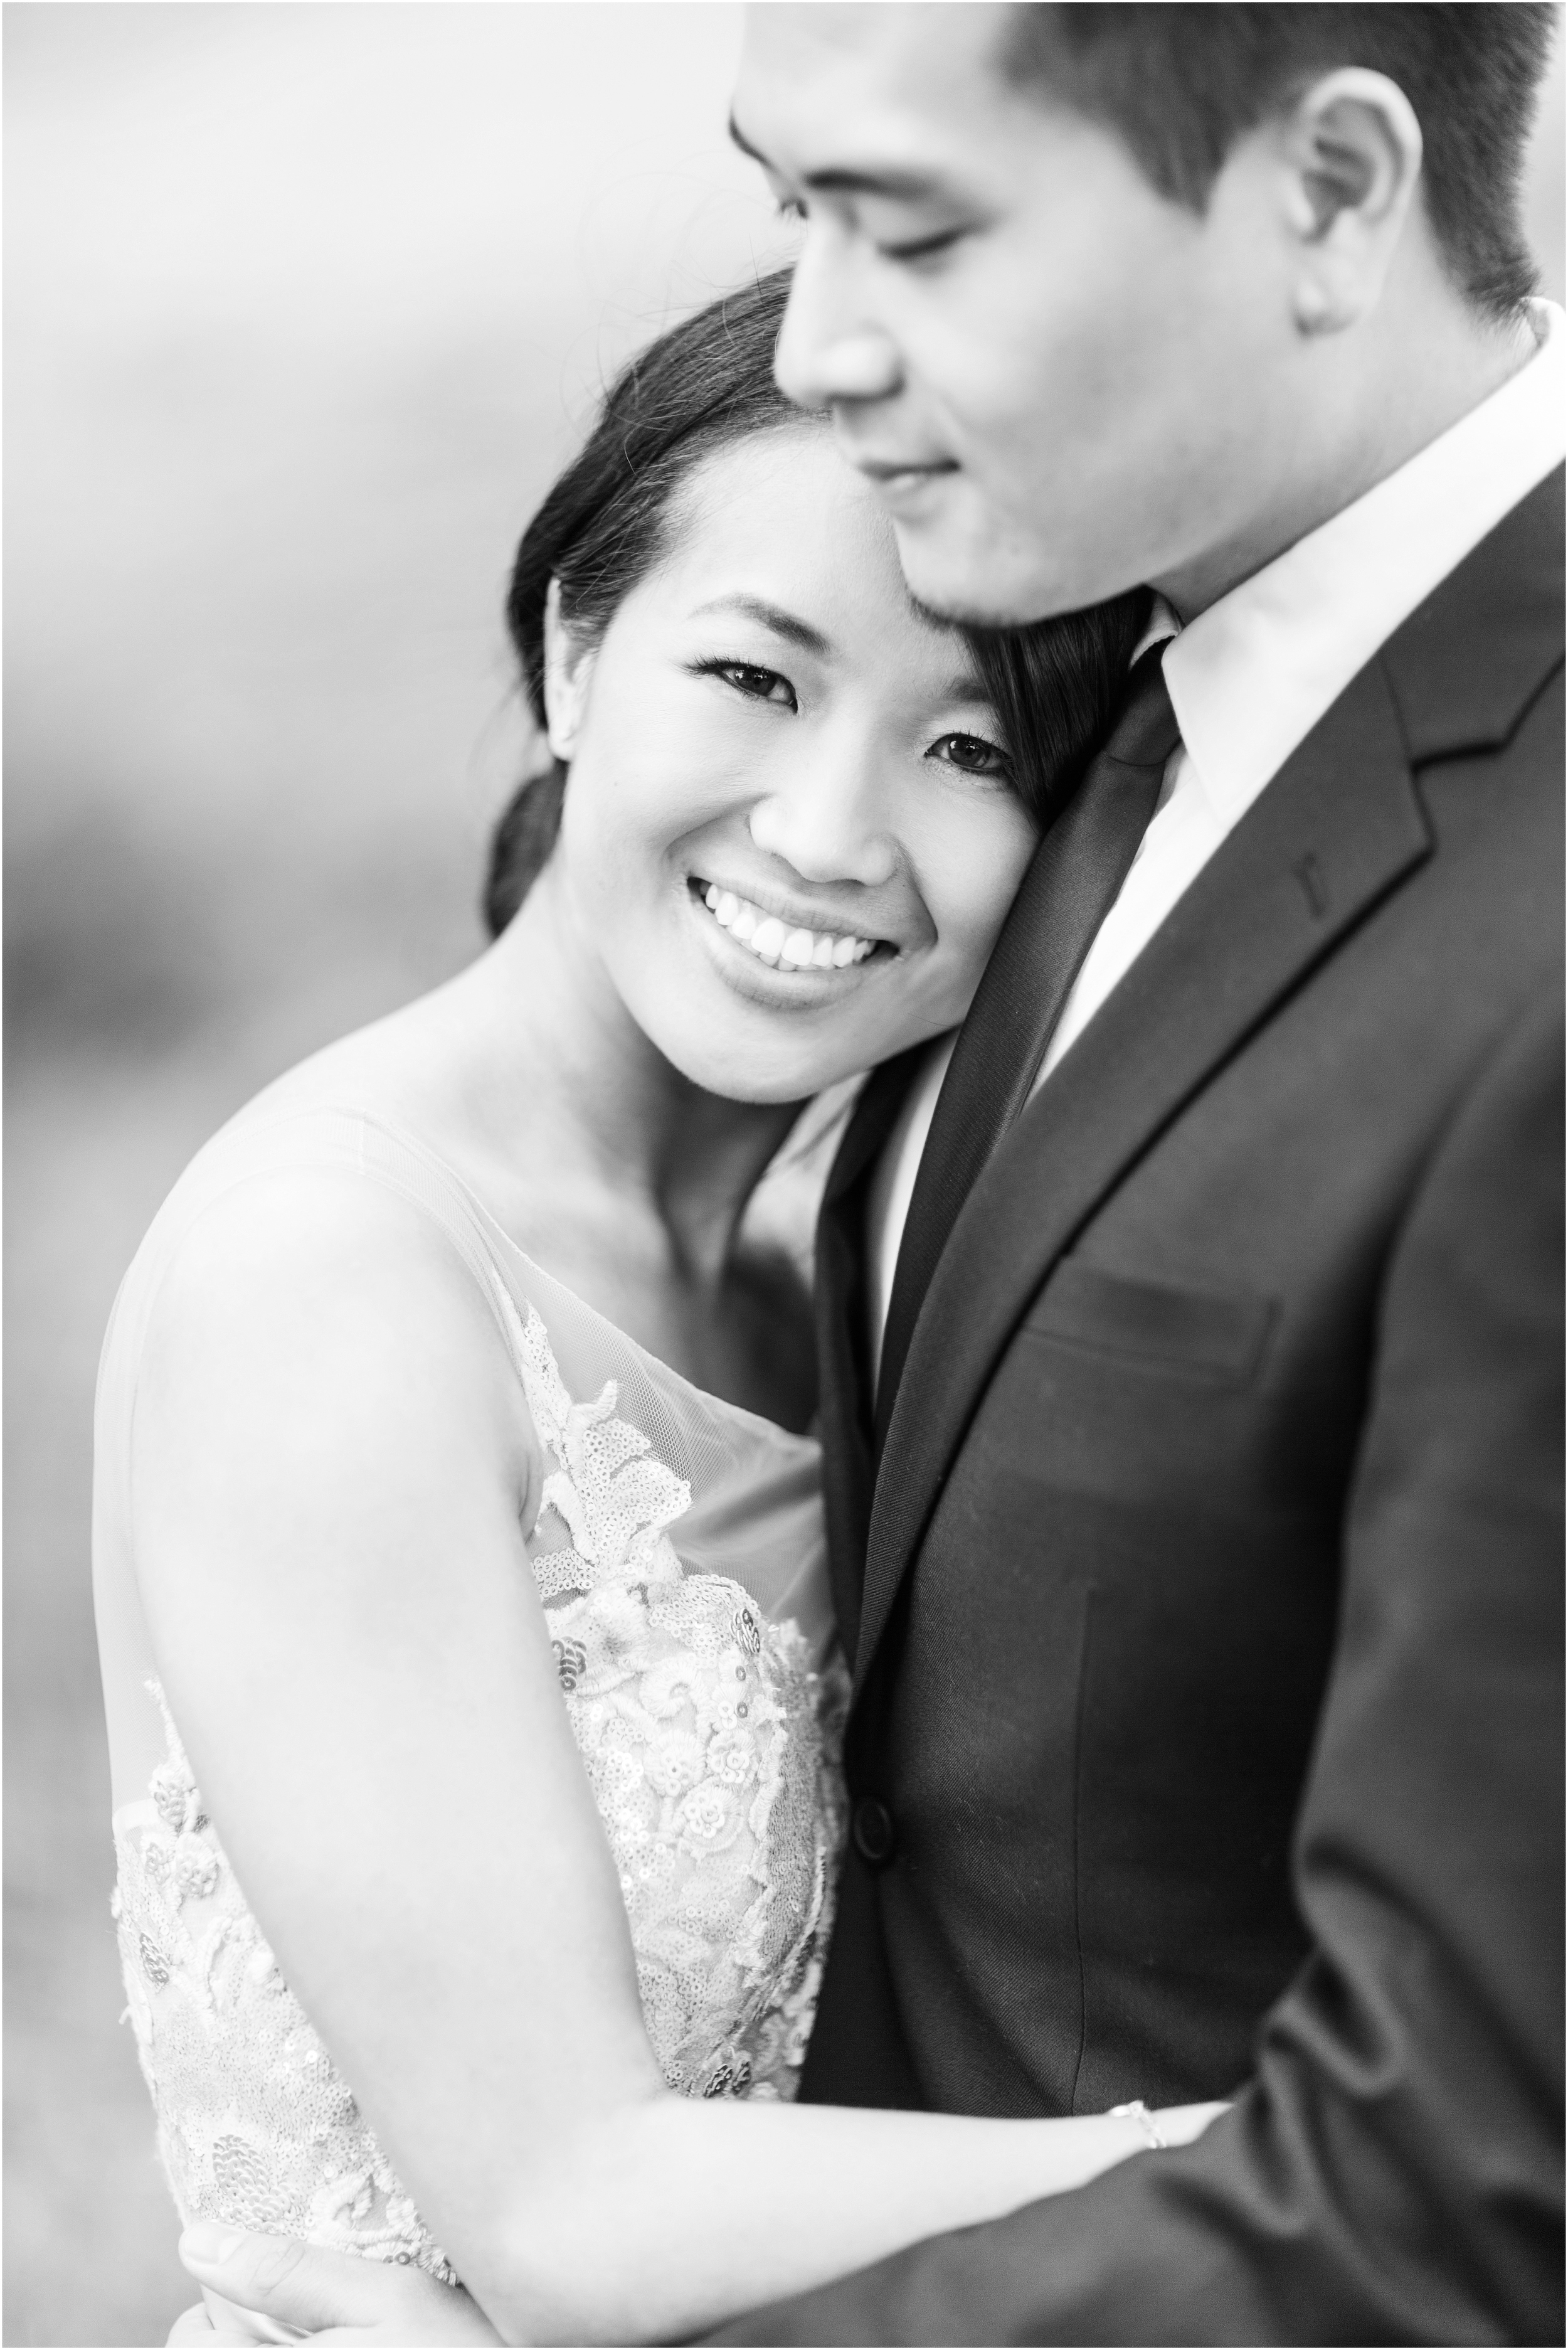 blueberryphotography.com | San Francisco Based Wedding & Lifestyle Photographer | Potrero Hill | San Francisco | Lands End